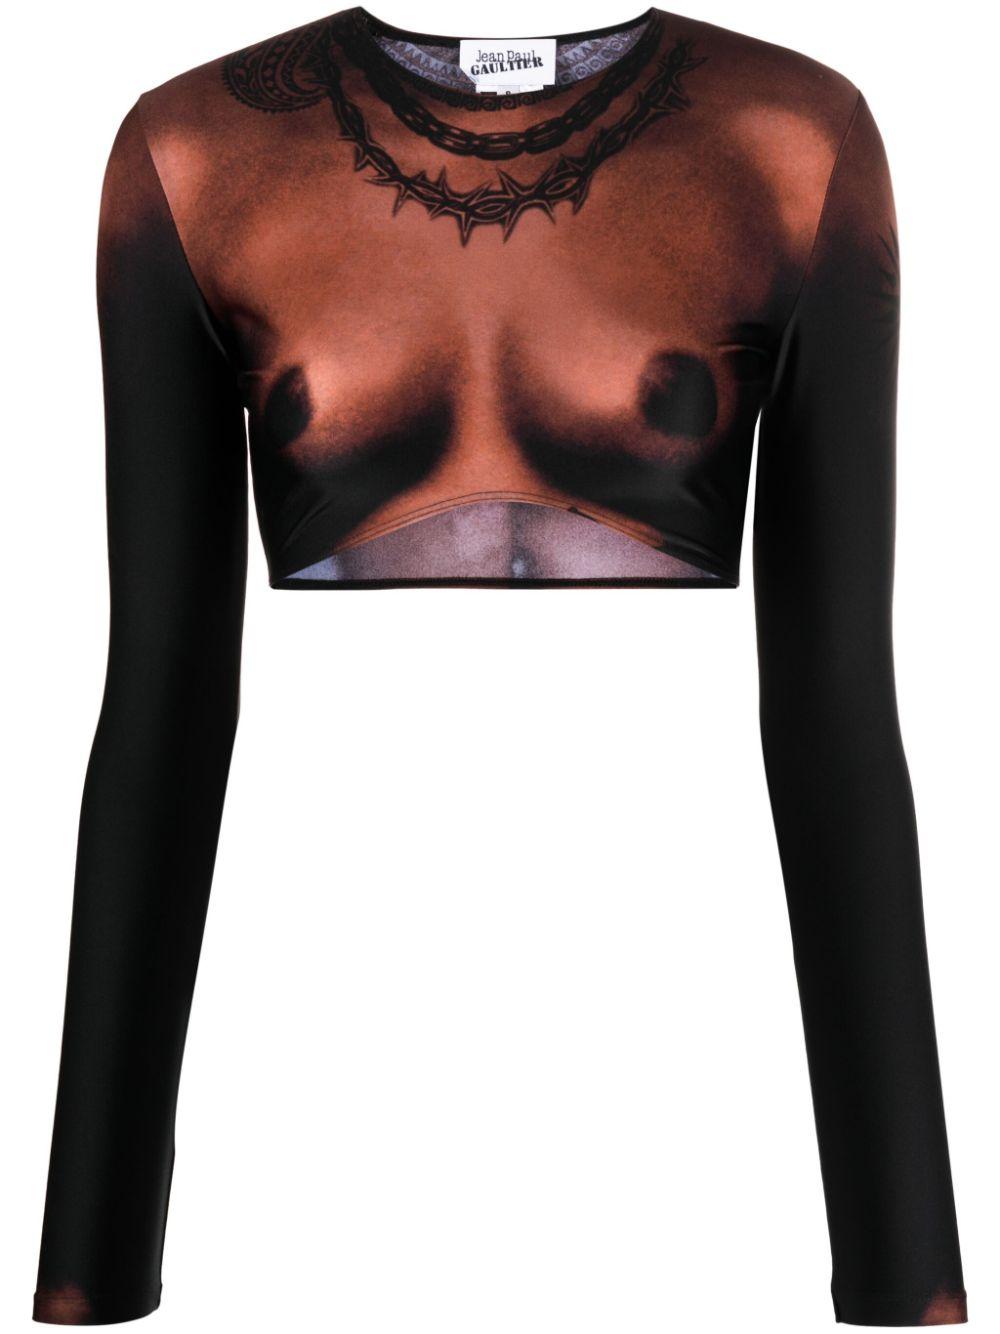 Jean Paul Gaultier Long-sleeve Cropped Top in Black